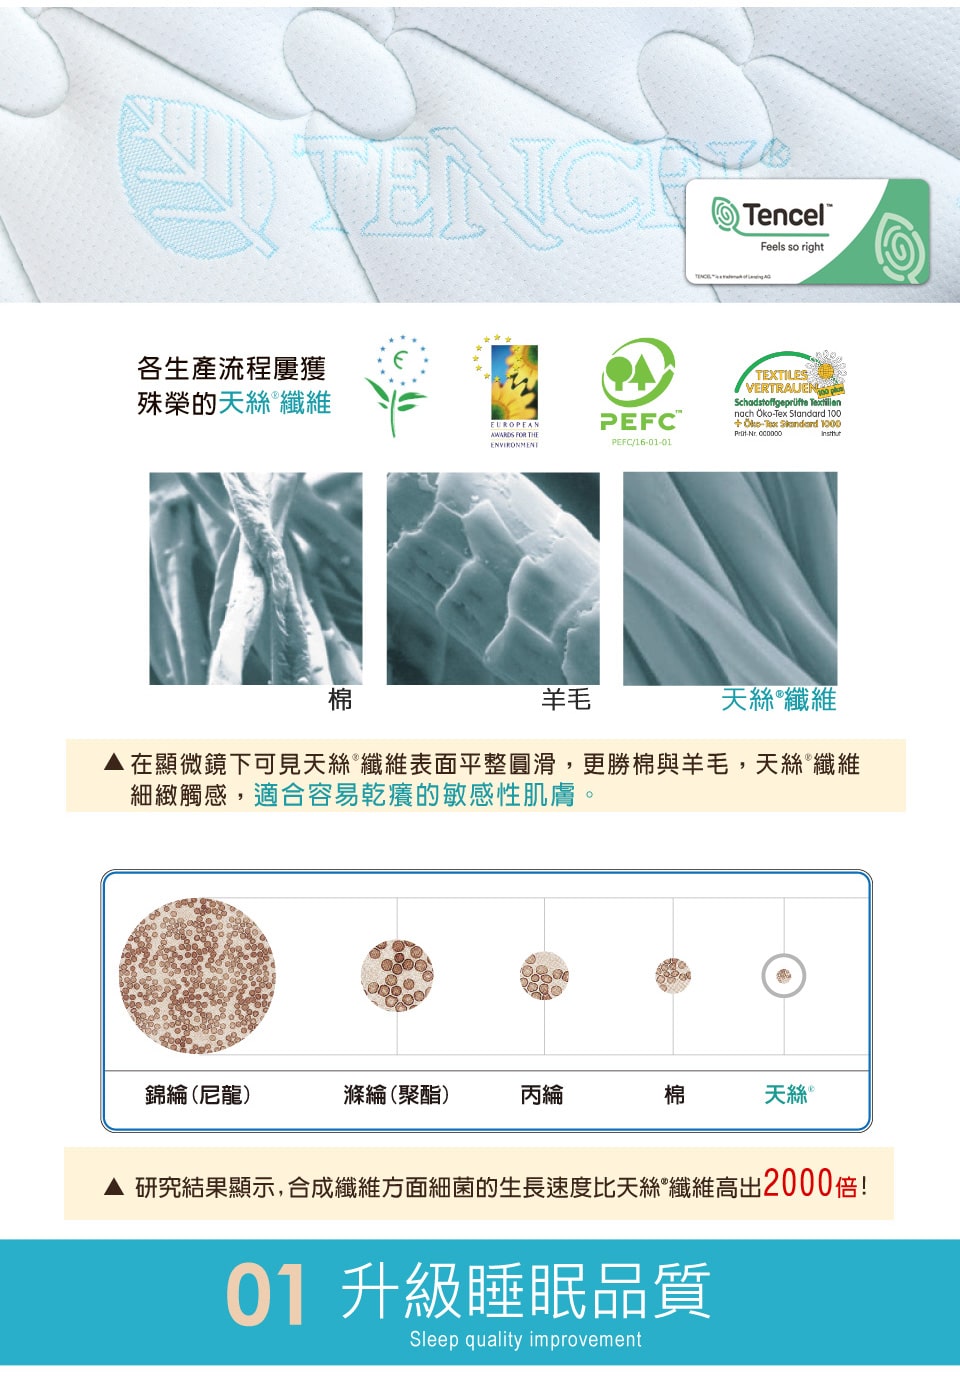 LooCa 抗菌天絲加厚日式床墊(單大3.5尺) 推薦